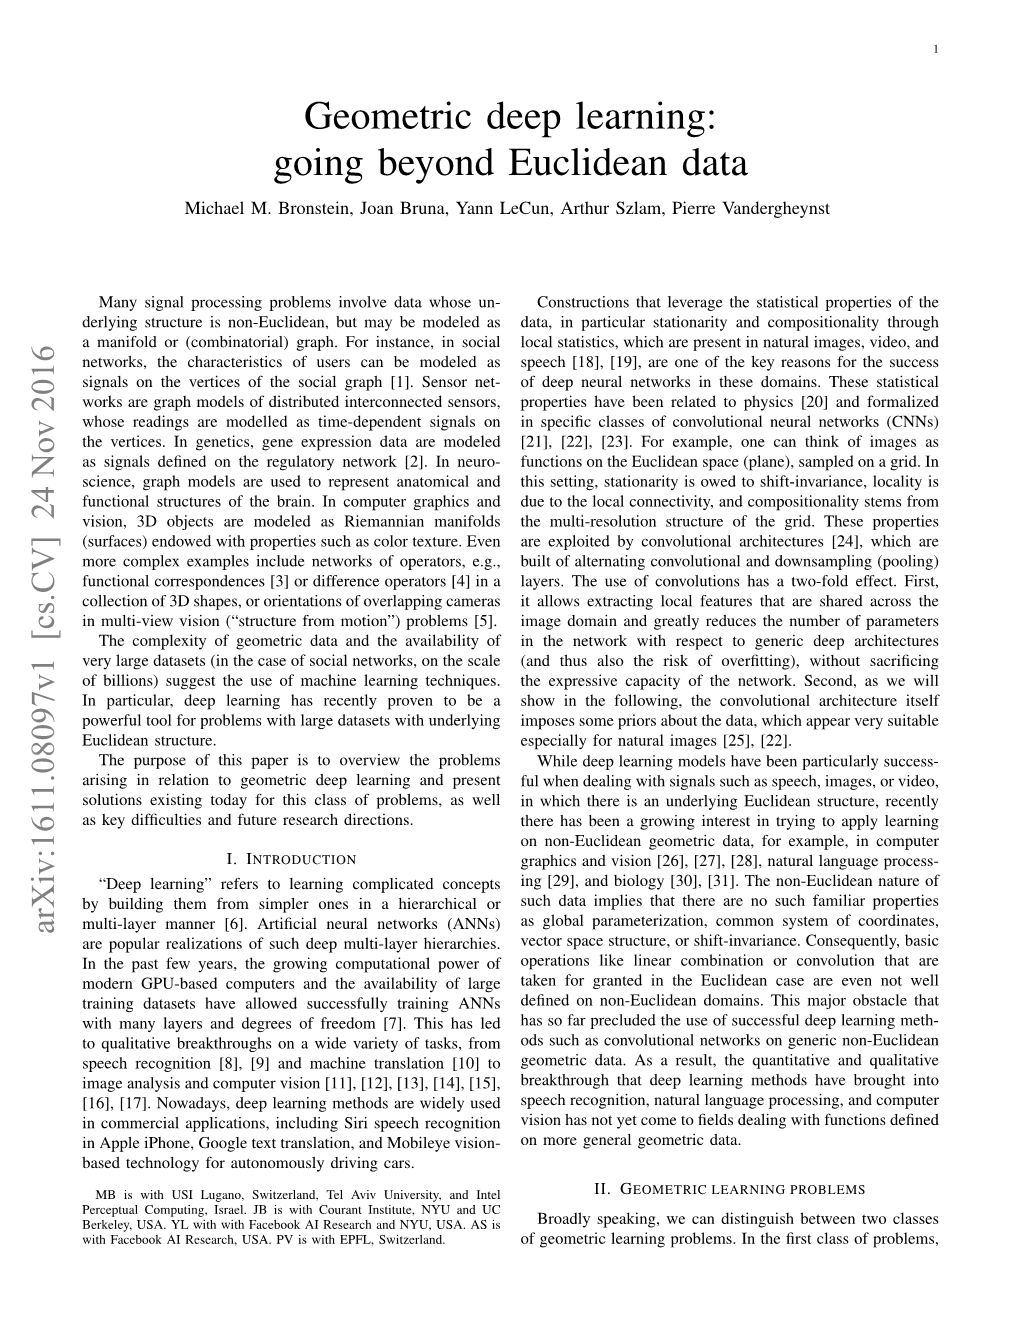 Geometric Deep Learning: Going Beyond Euclidean Data Michael M